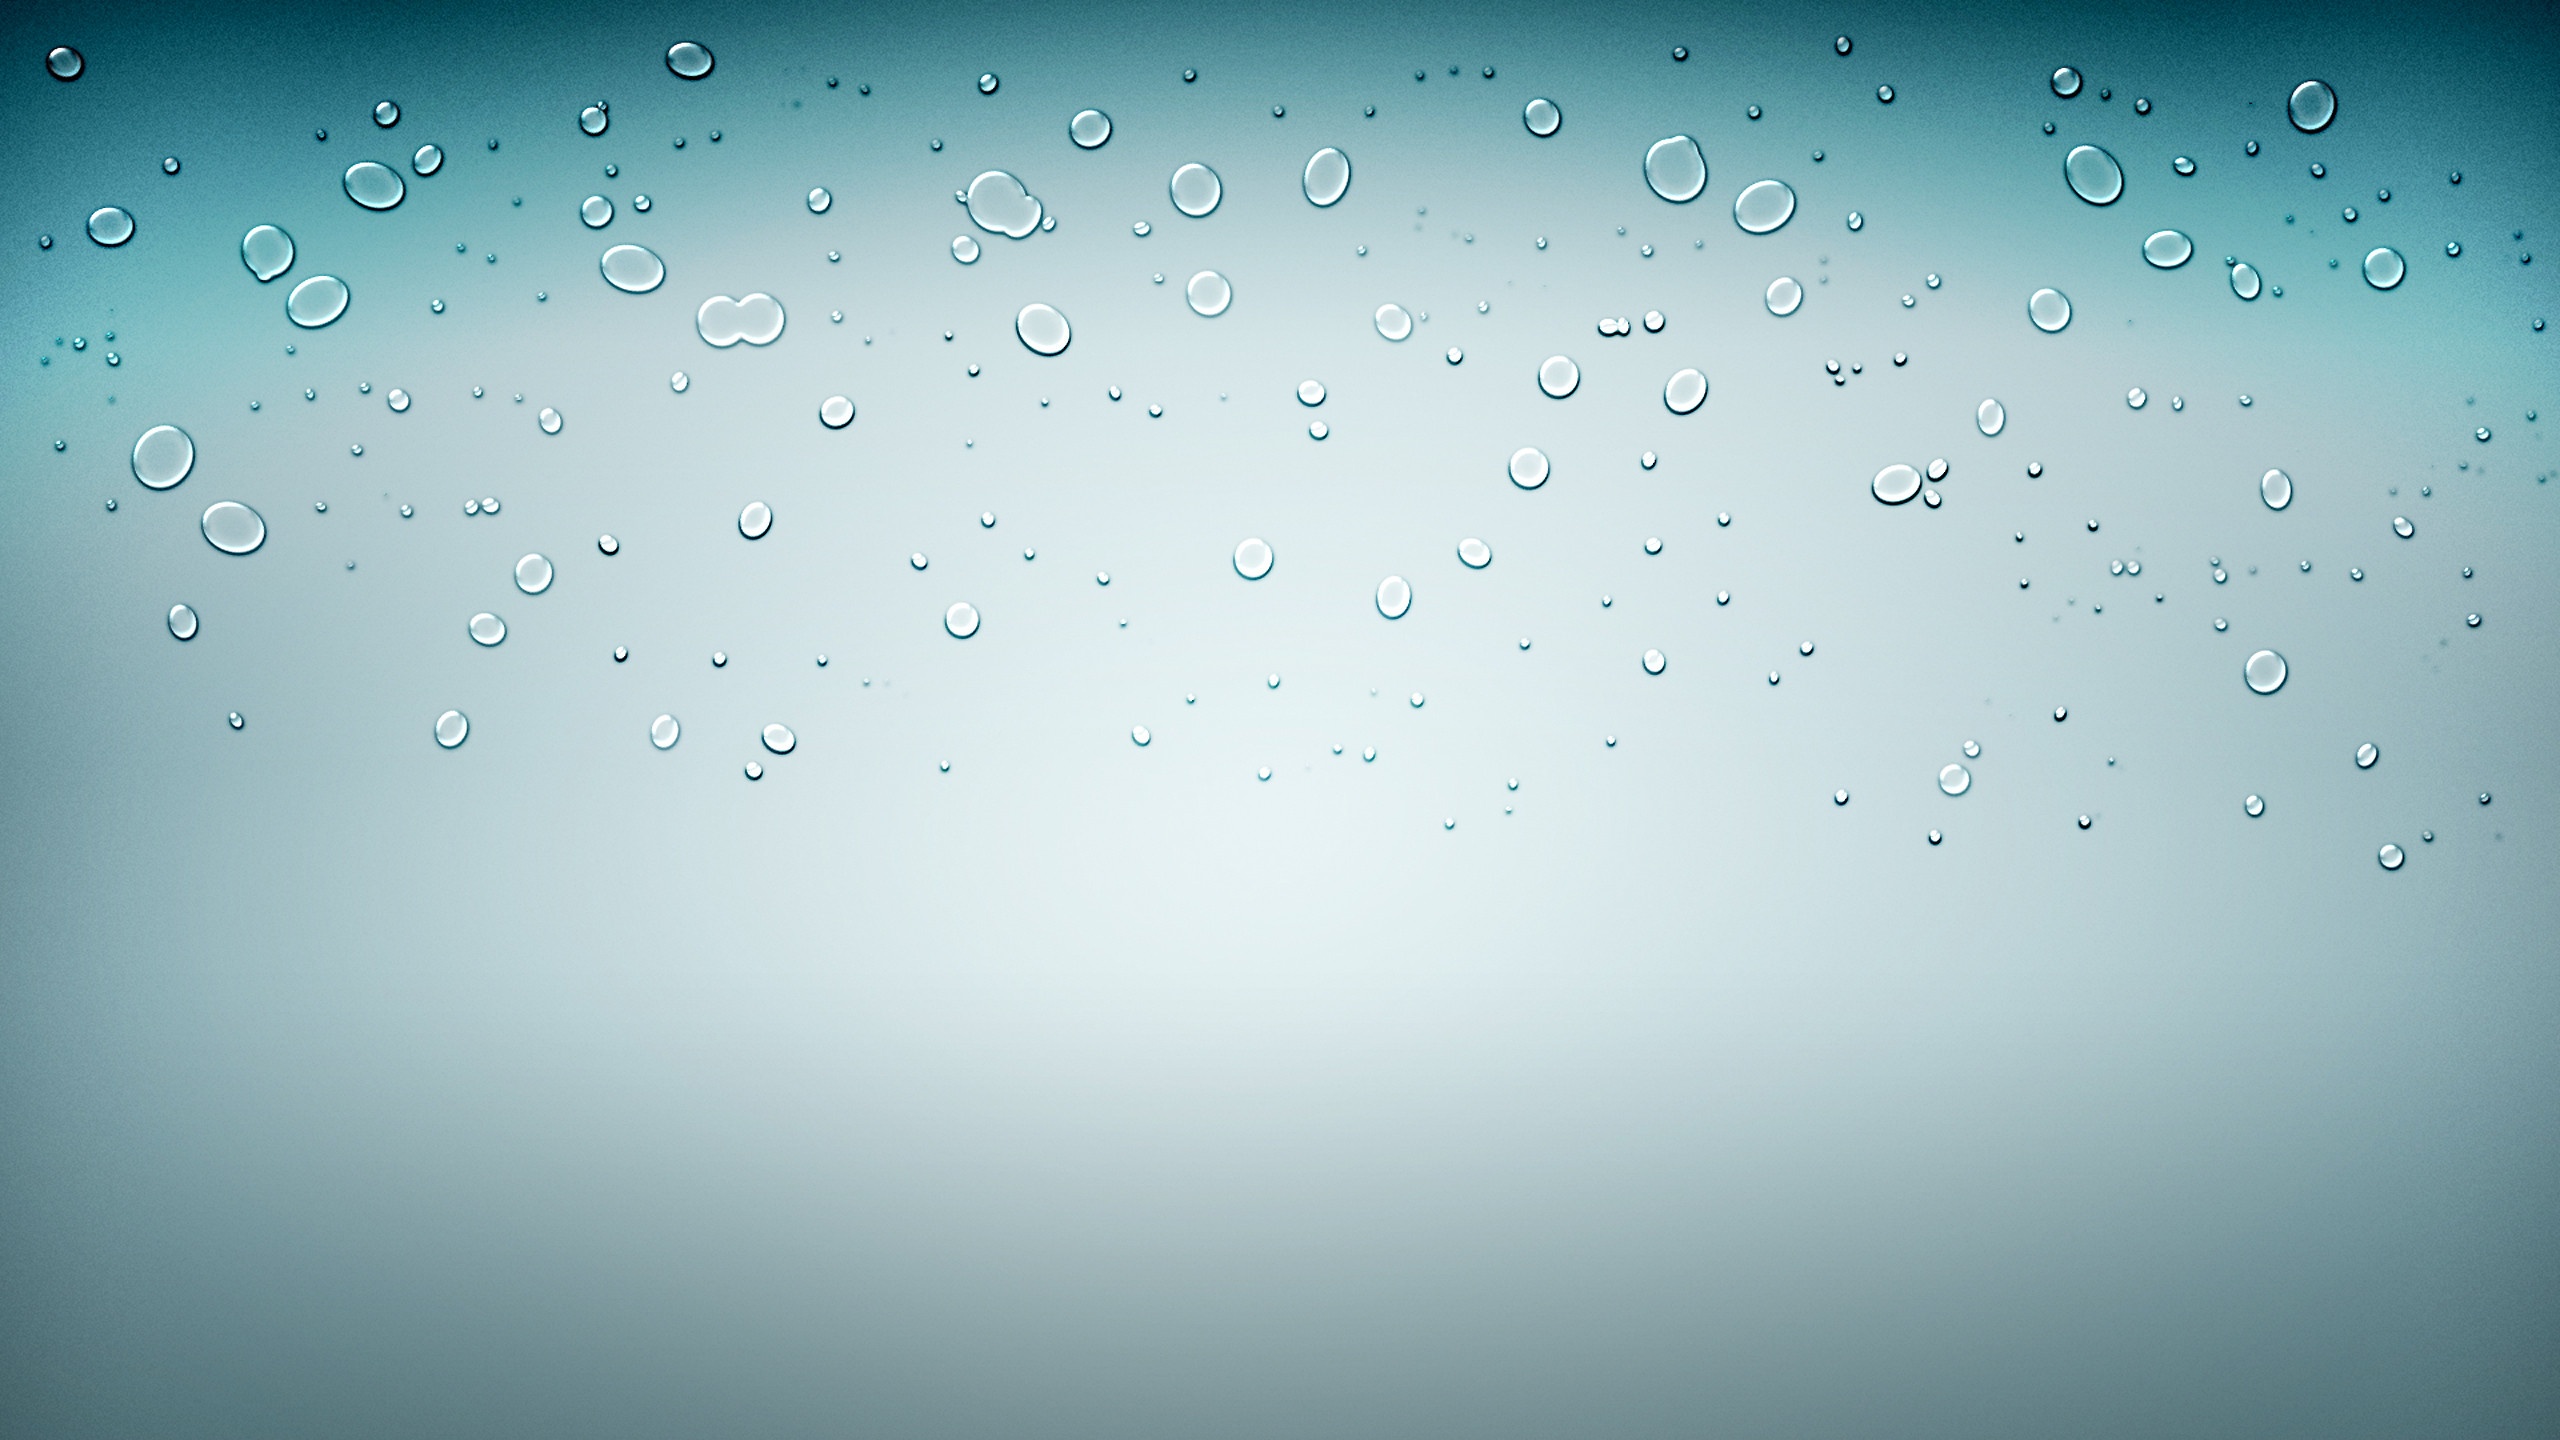 iOS Water Drops Wallpaper for the Desktop